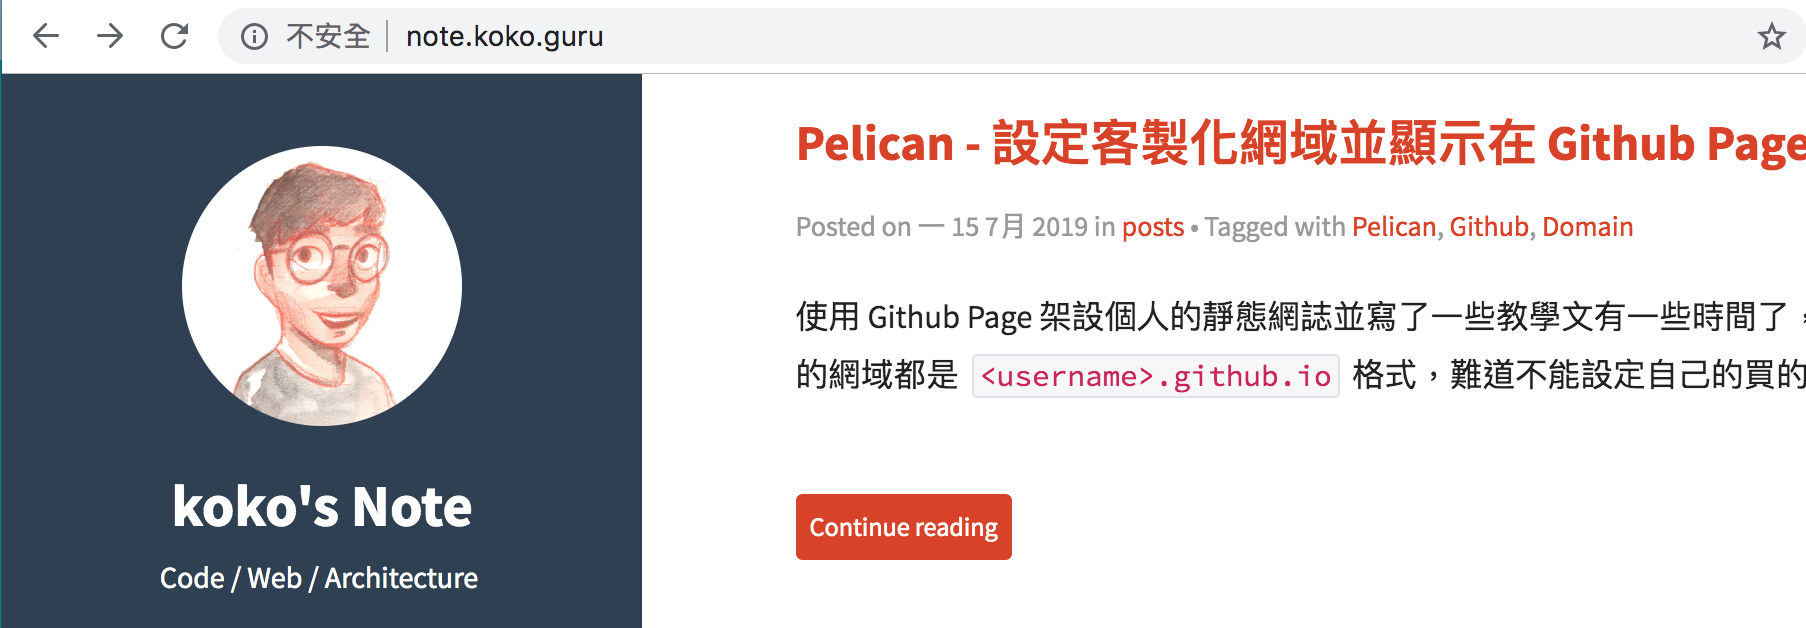 github-page-custom-domain-http